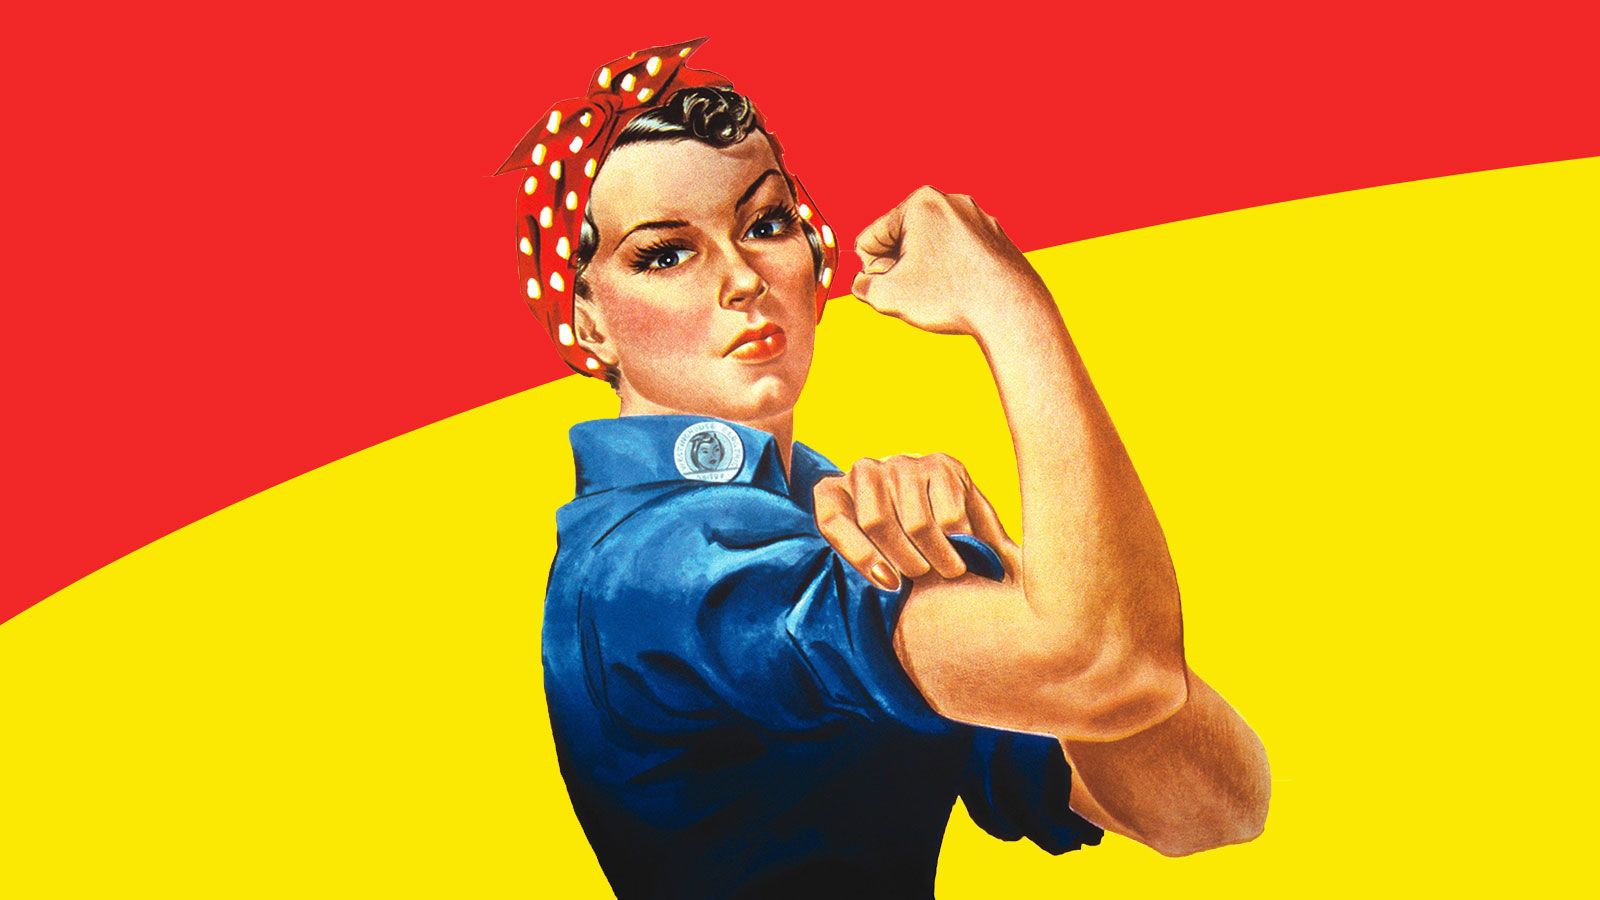 We can download. Клепальщицы Рози (Rosie the Riveter). Клепальщица Ро́узи. Клепальщица Рози плакат. Женщина с плакатом.